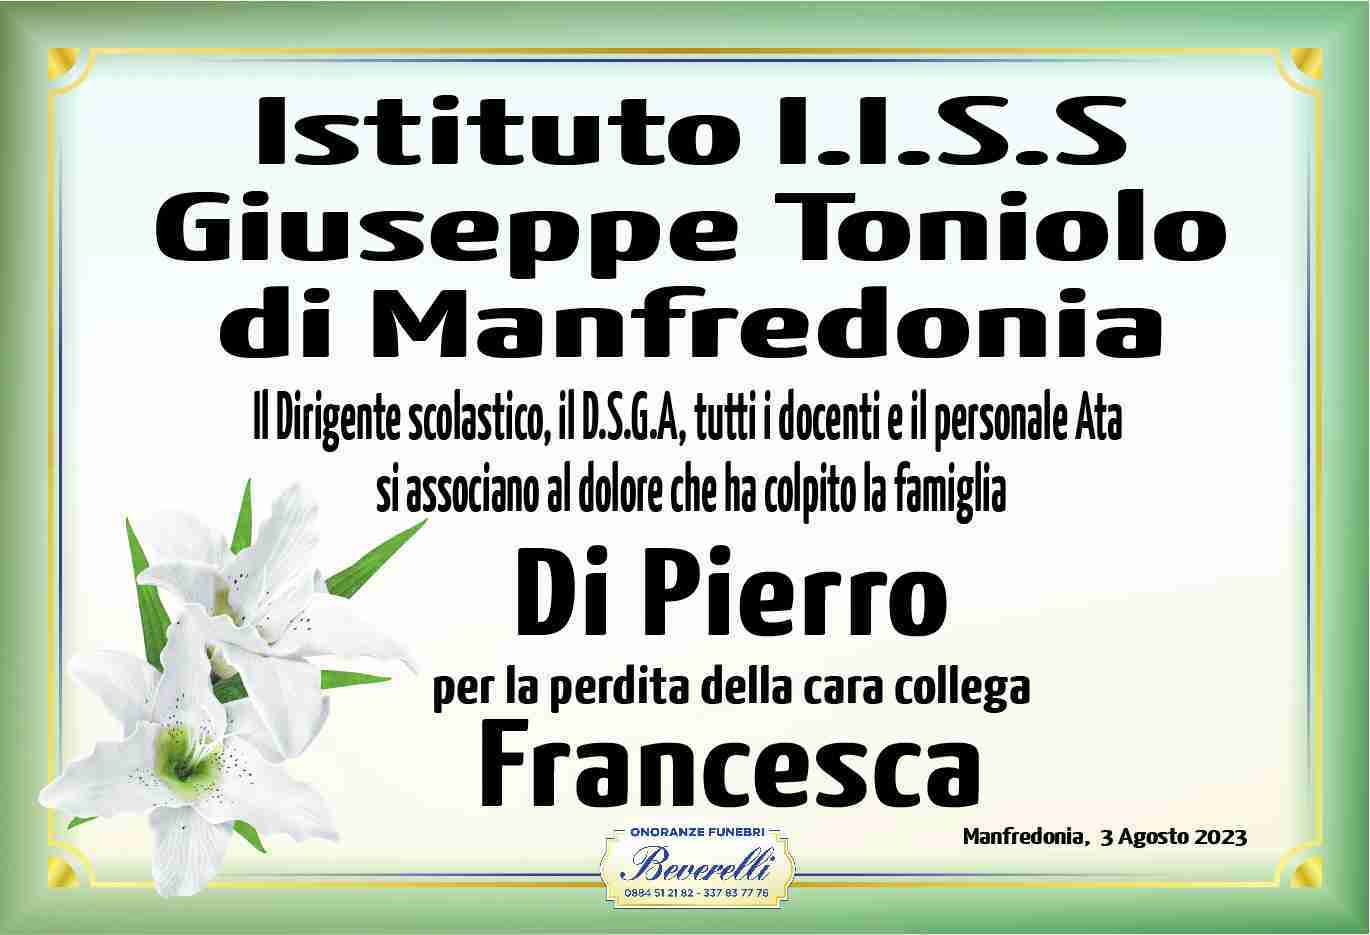 Francesca Di Pierro